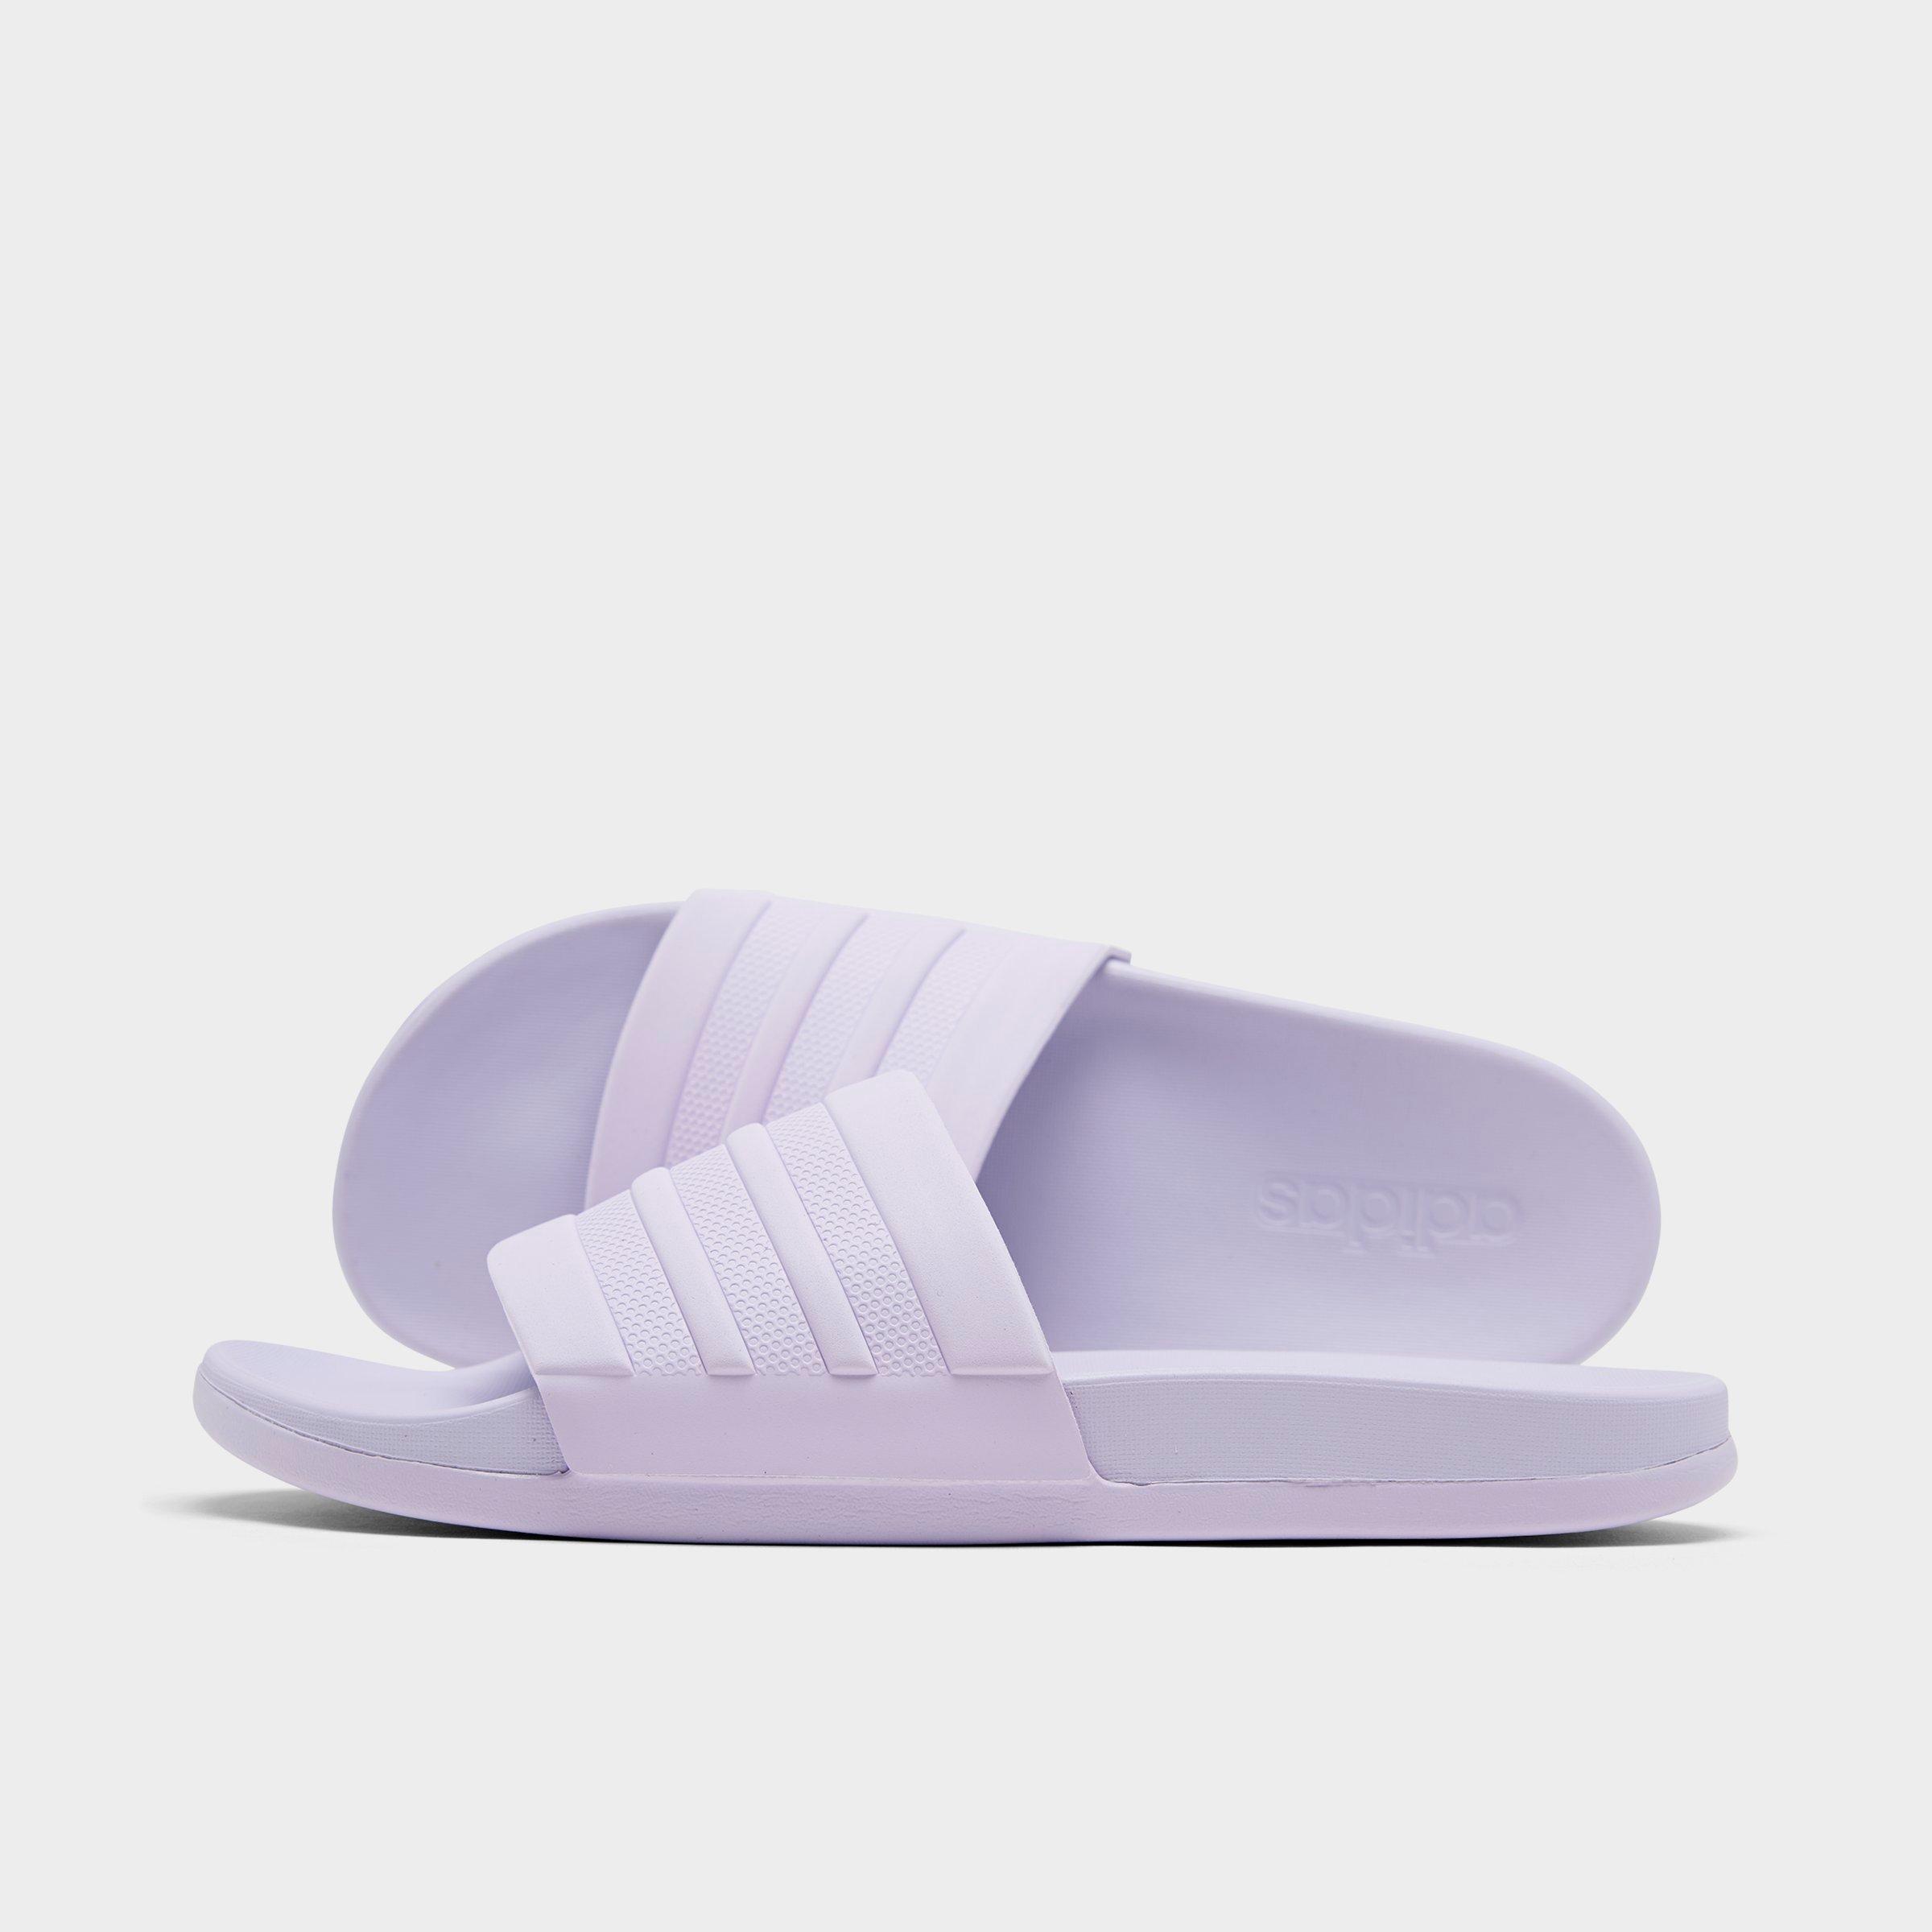 adidas slides lavender